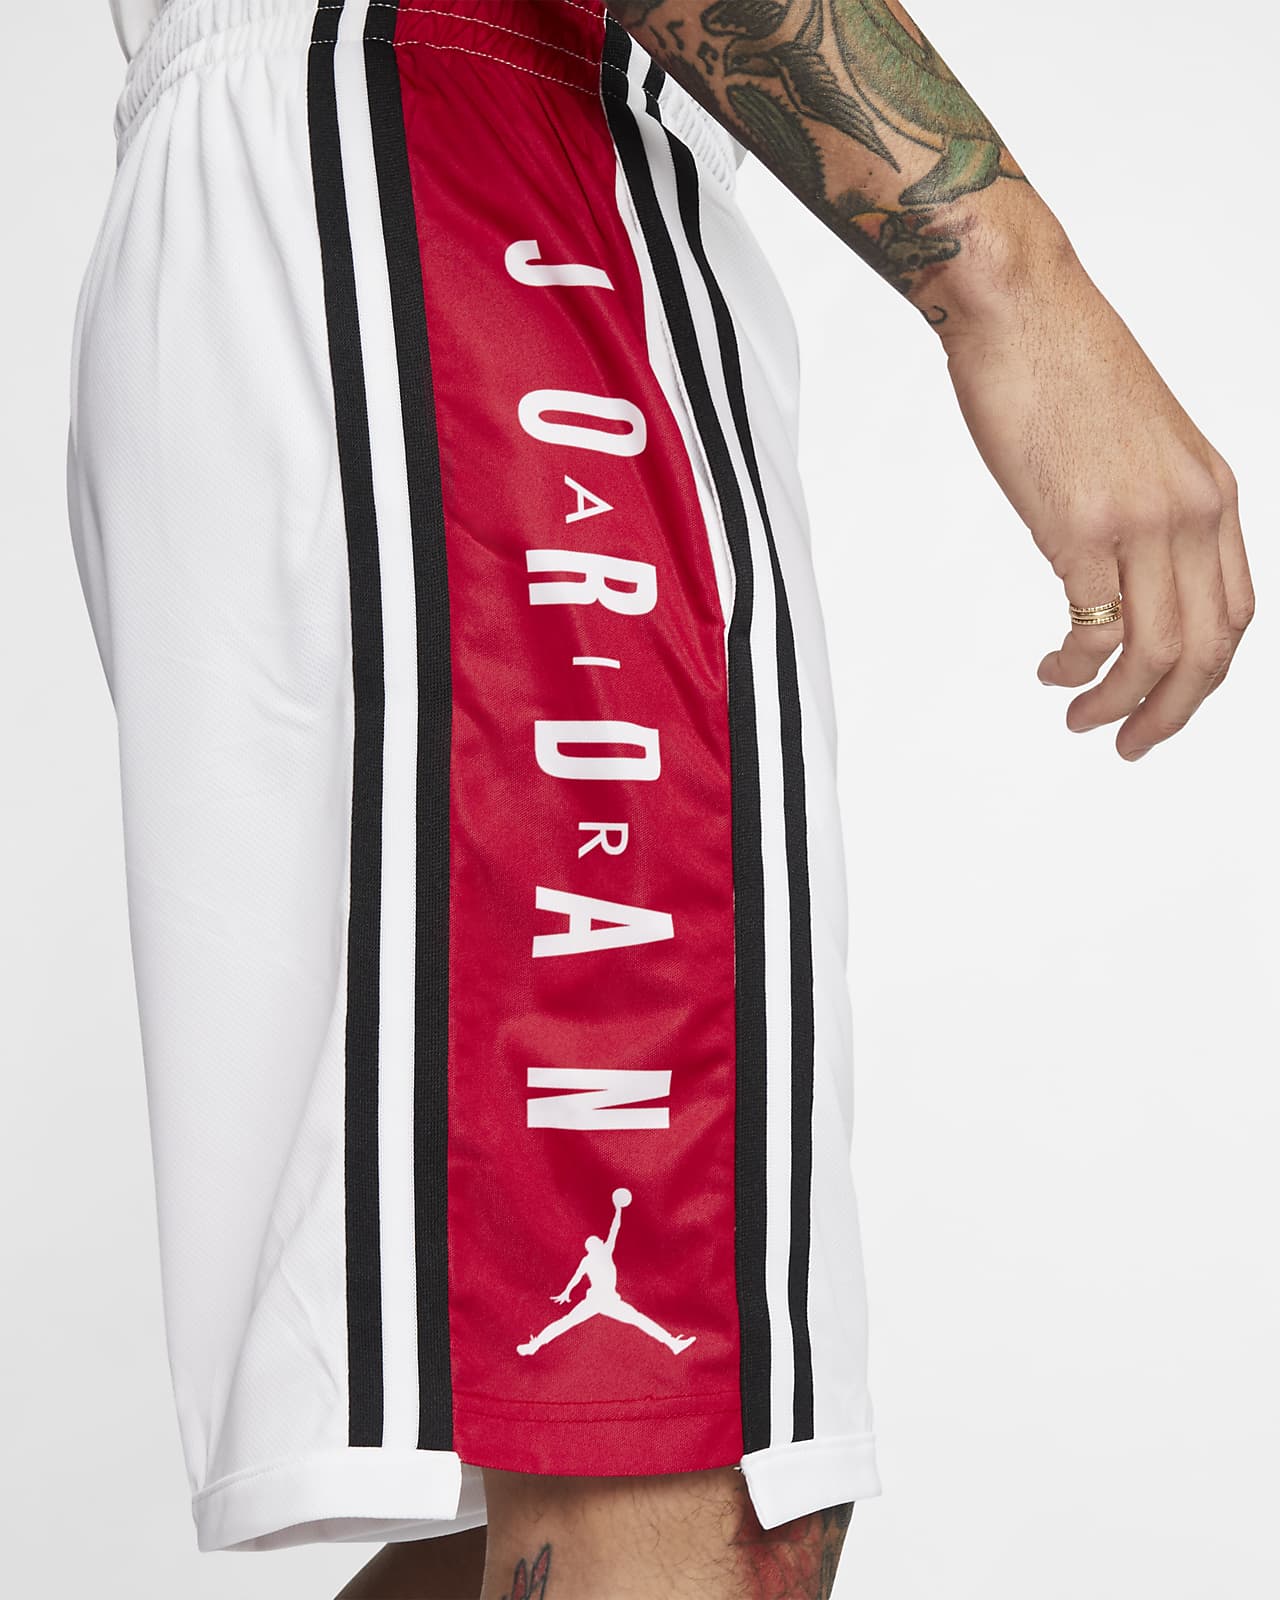 Jordan HBR. Nike 